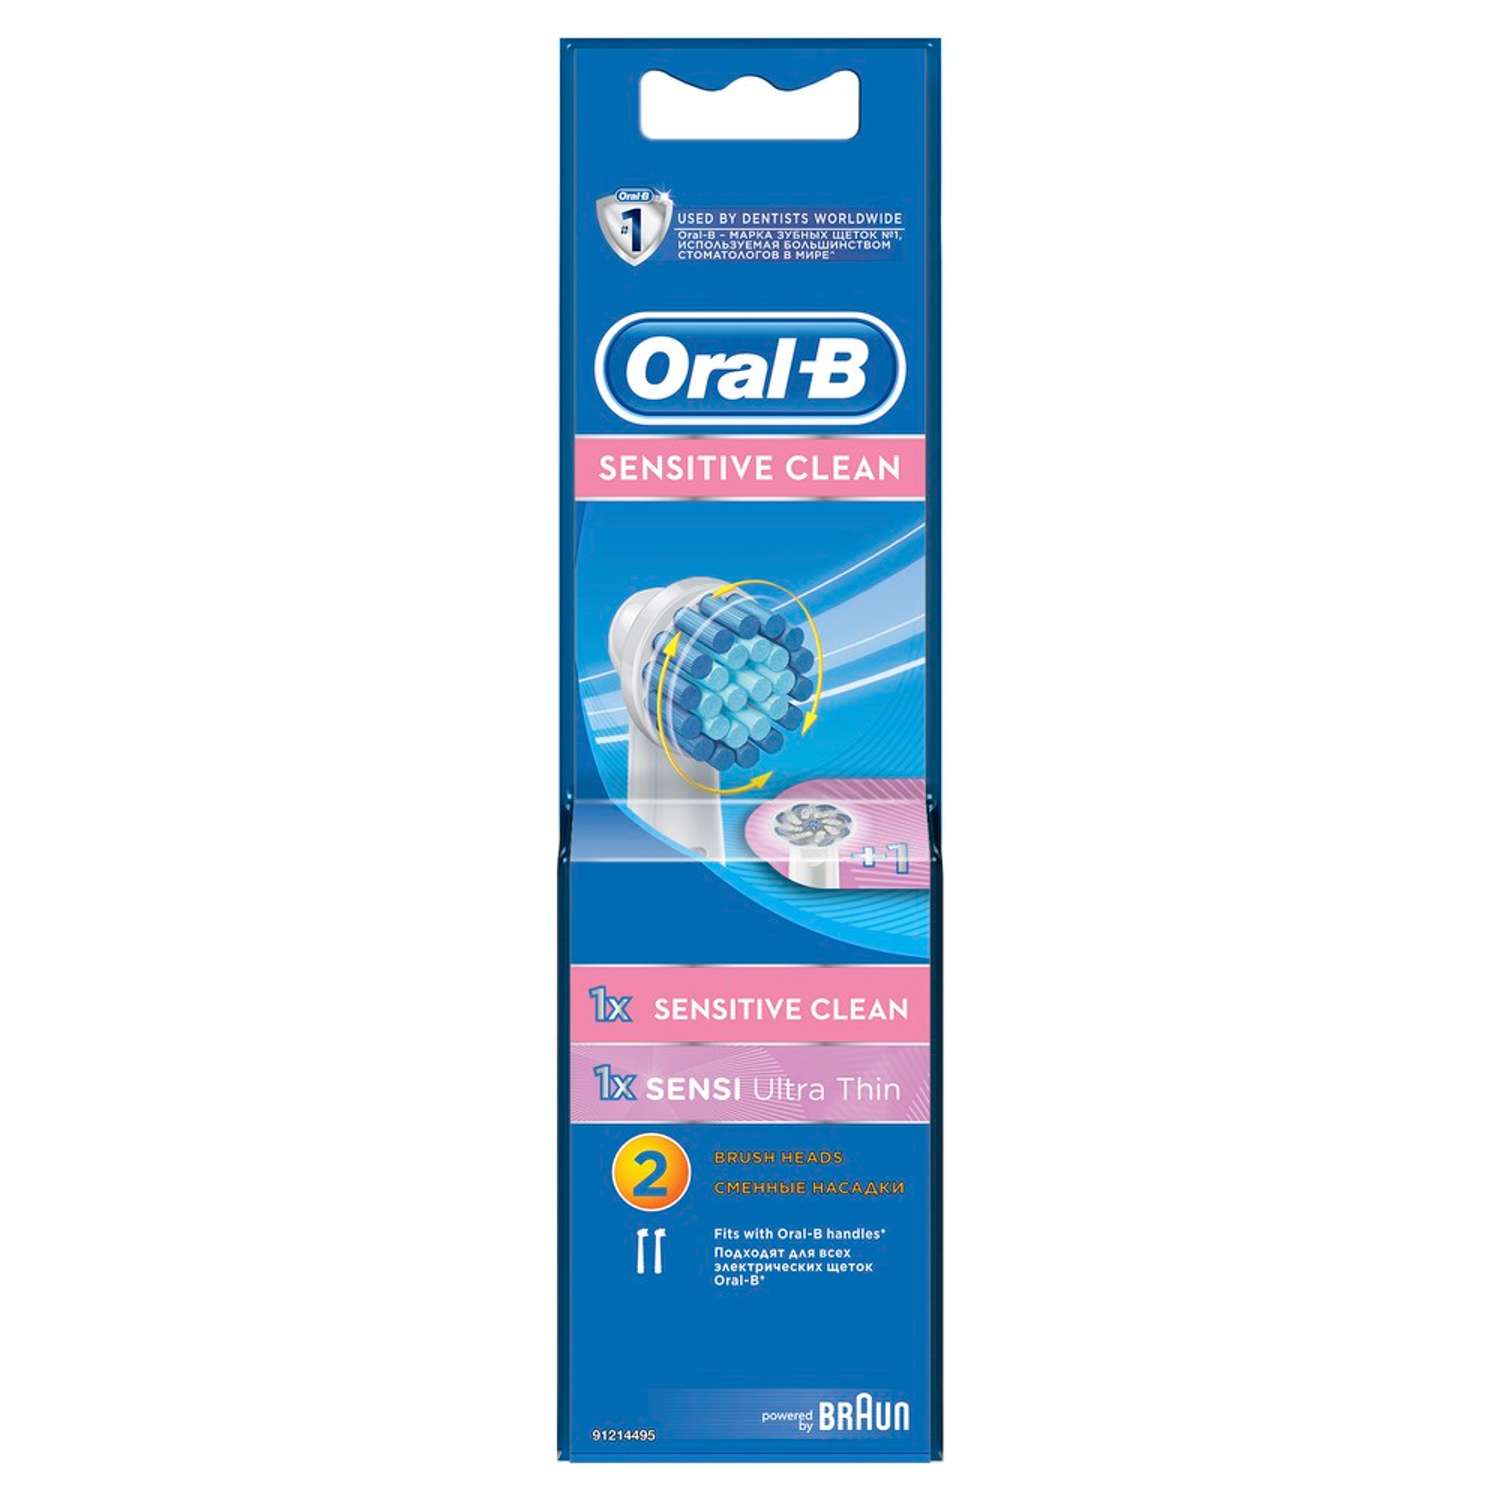 Насадки для зубных щеток ORAL-B Sensitive Clean EB17S-1 и Sensi Ultrathin EB60-1 - фото 7